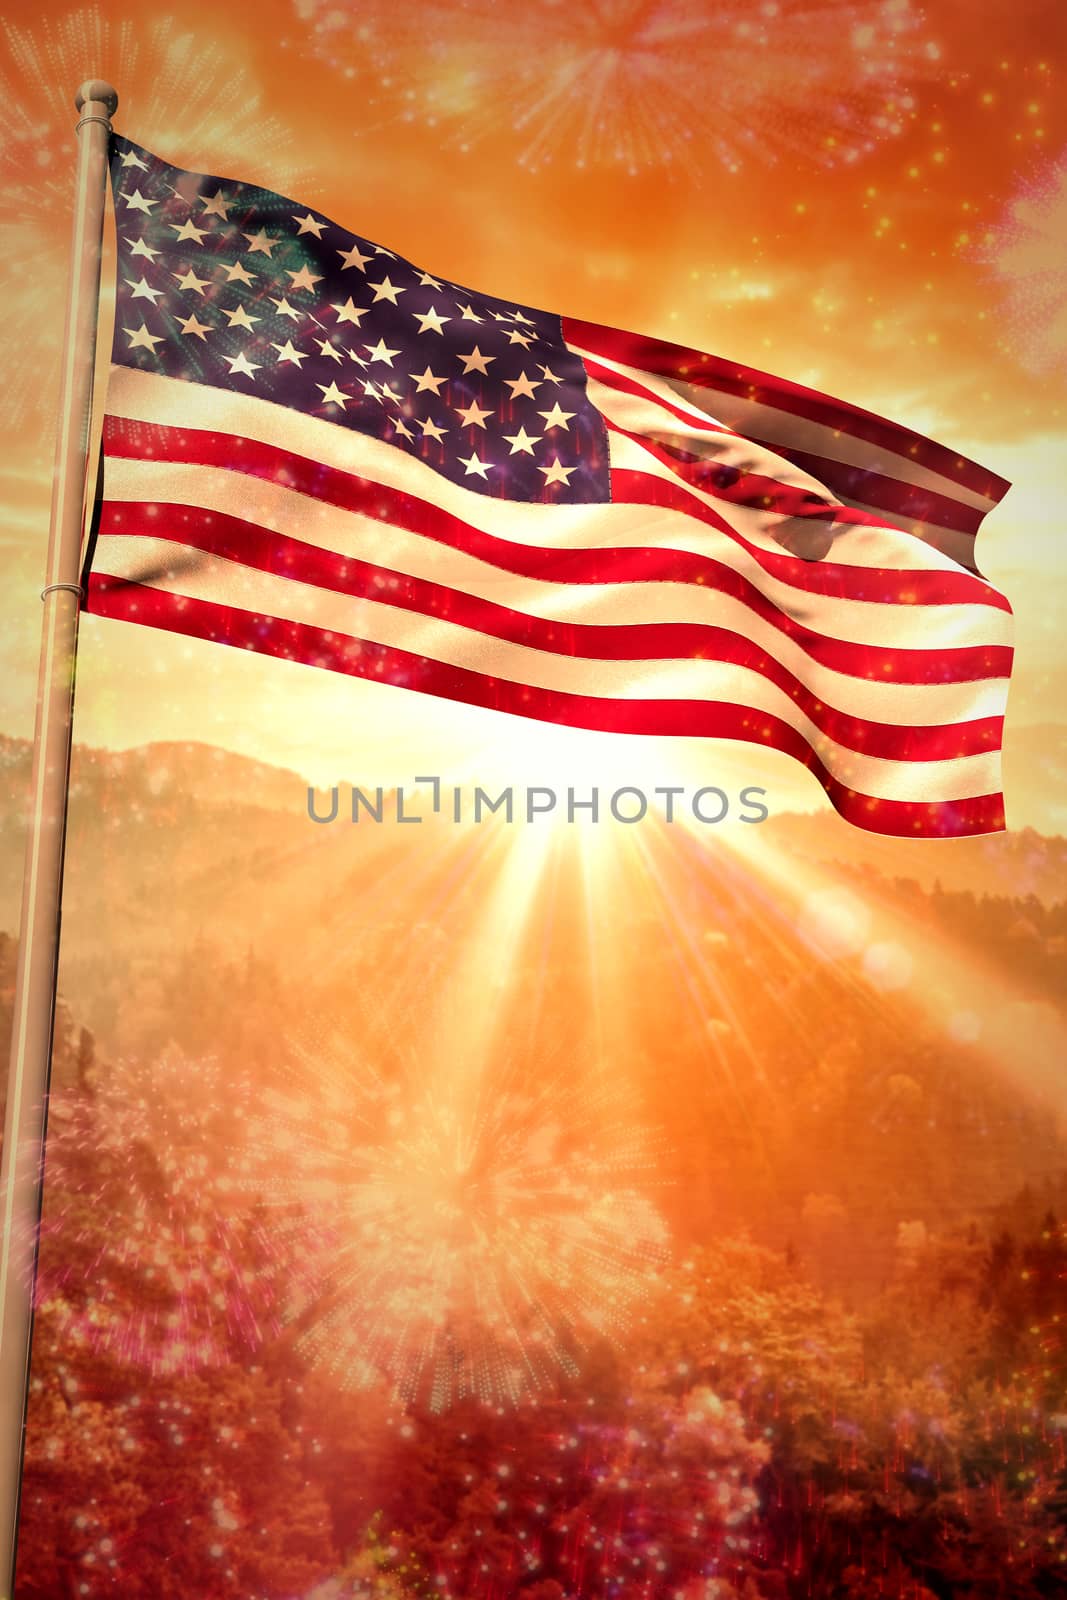 USA national flag against colourful fireworks exploding on black background